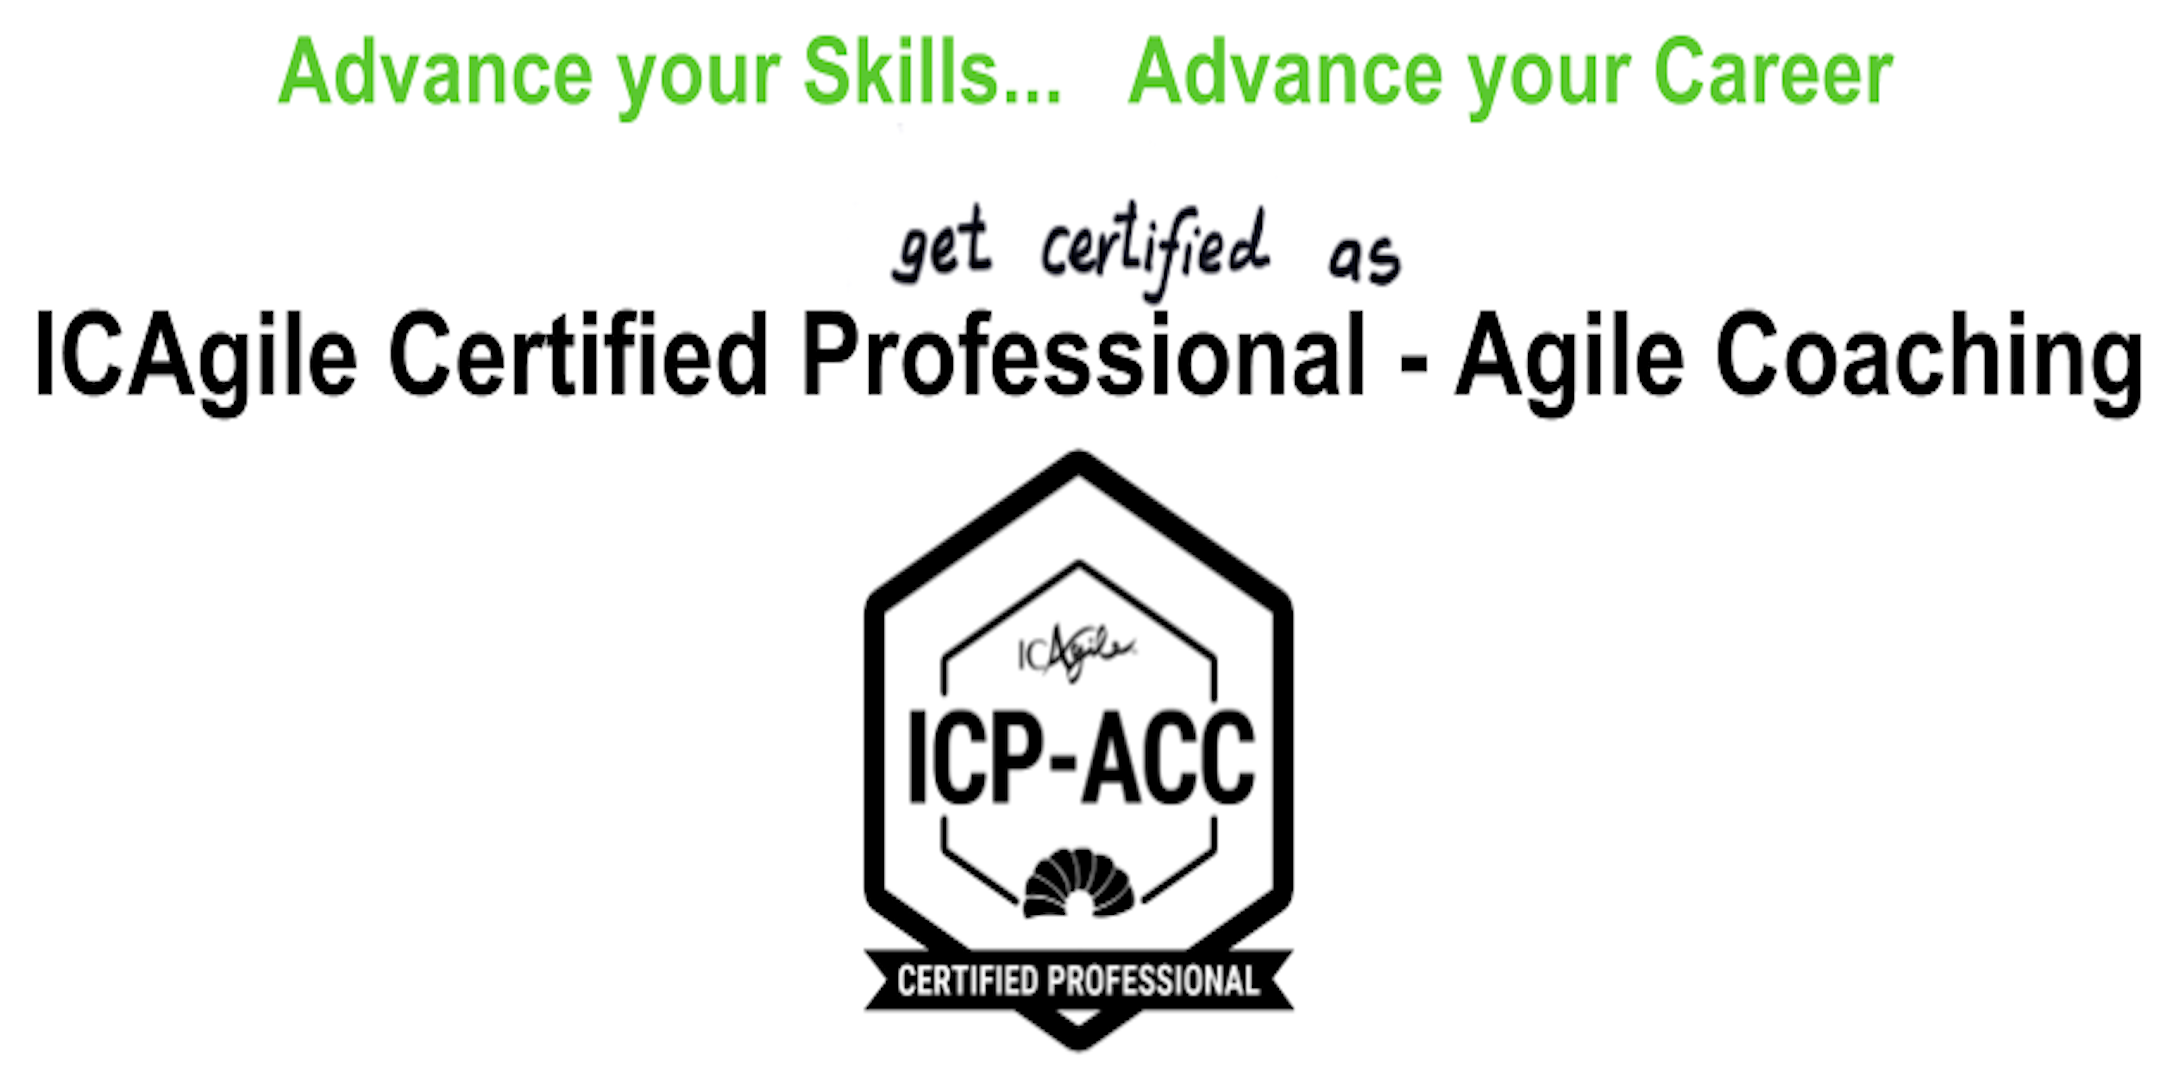 ICAgile Certified Professional - Agile Coaching (ICP ACC) Workshop -Wilmington, DE